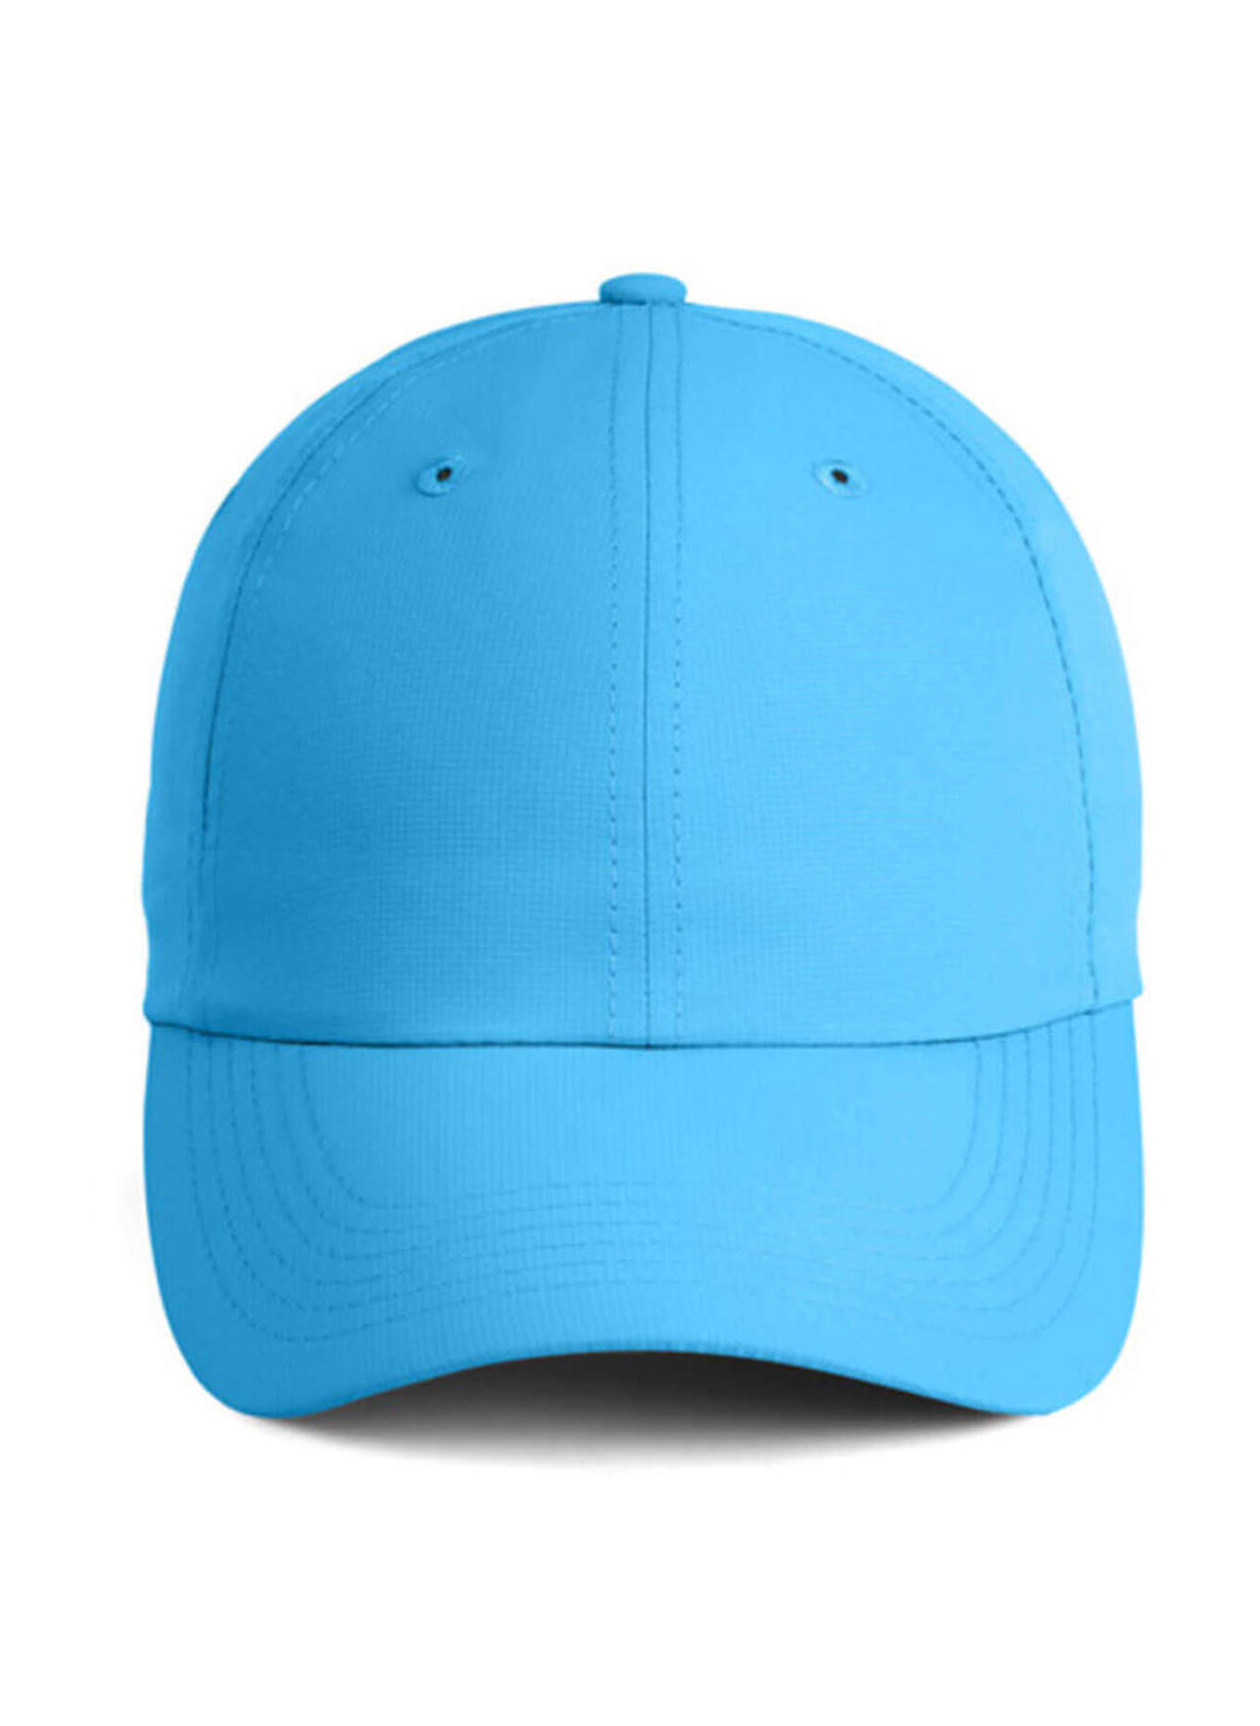 Imperial Pacific Blue Original Performance Hat